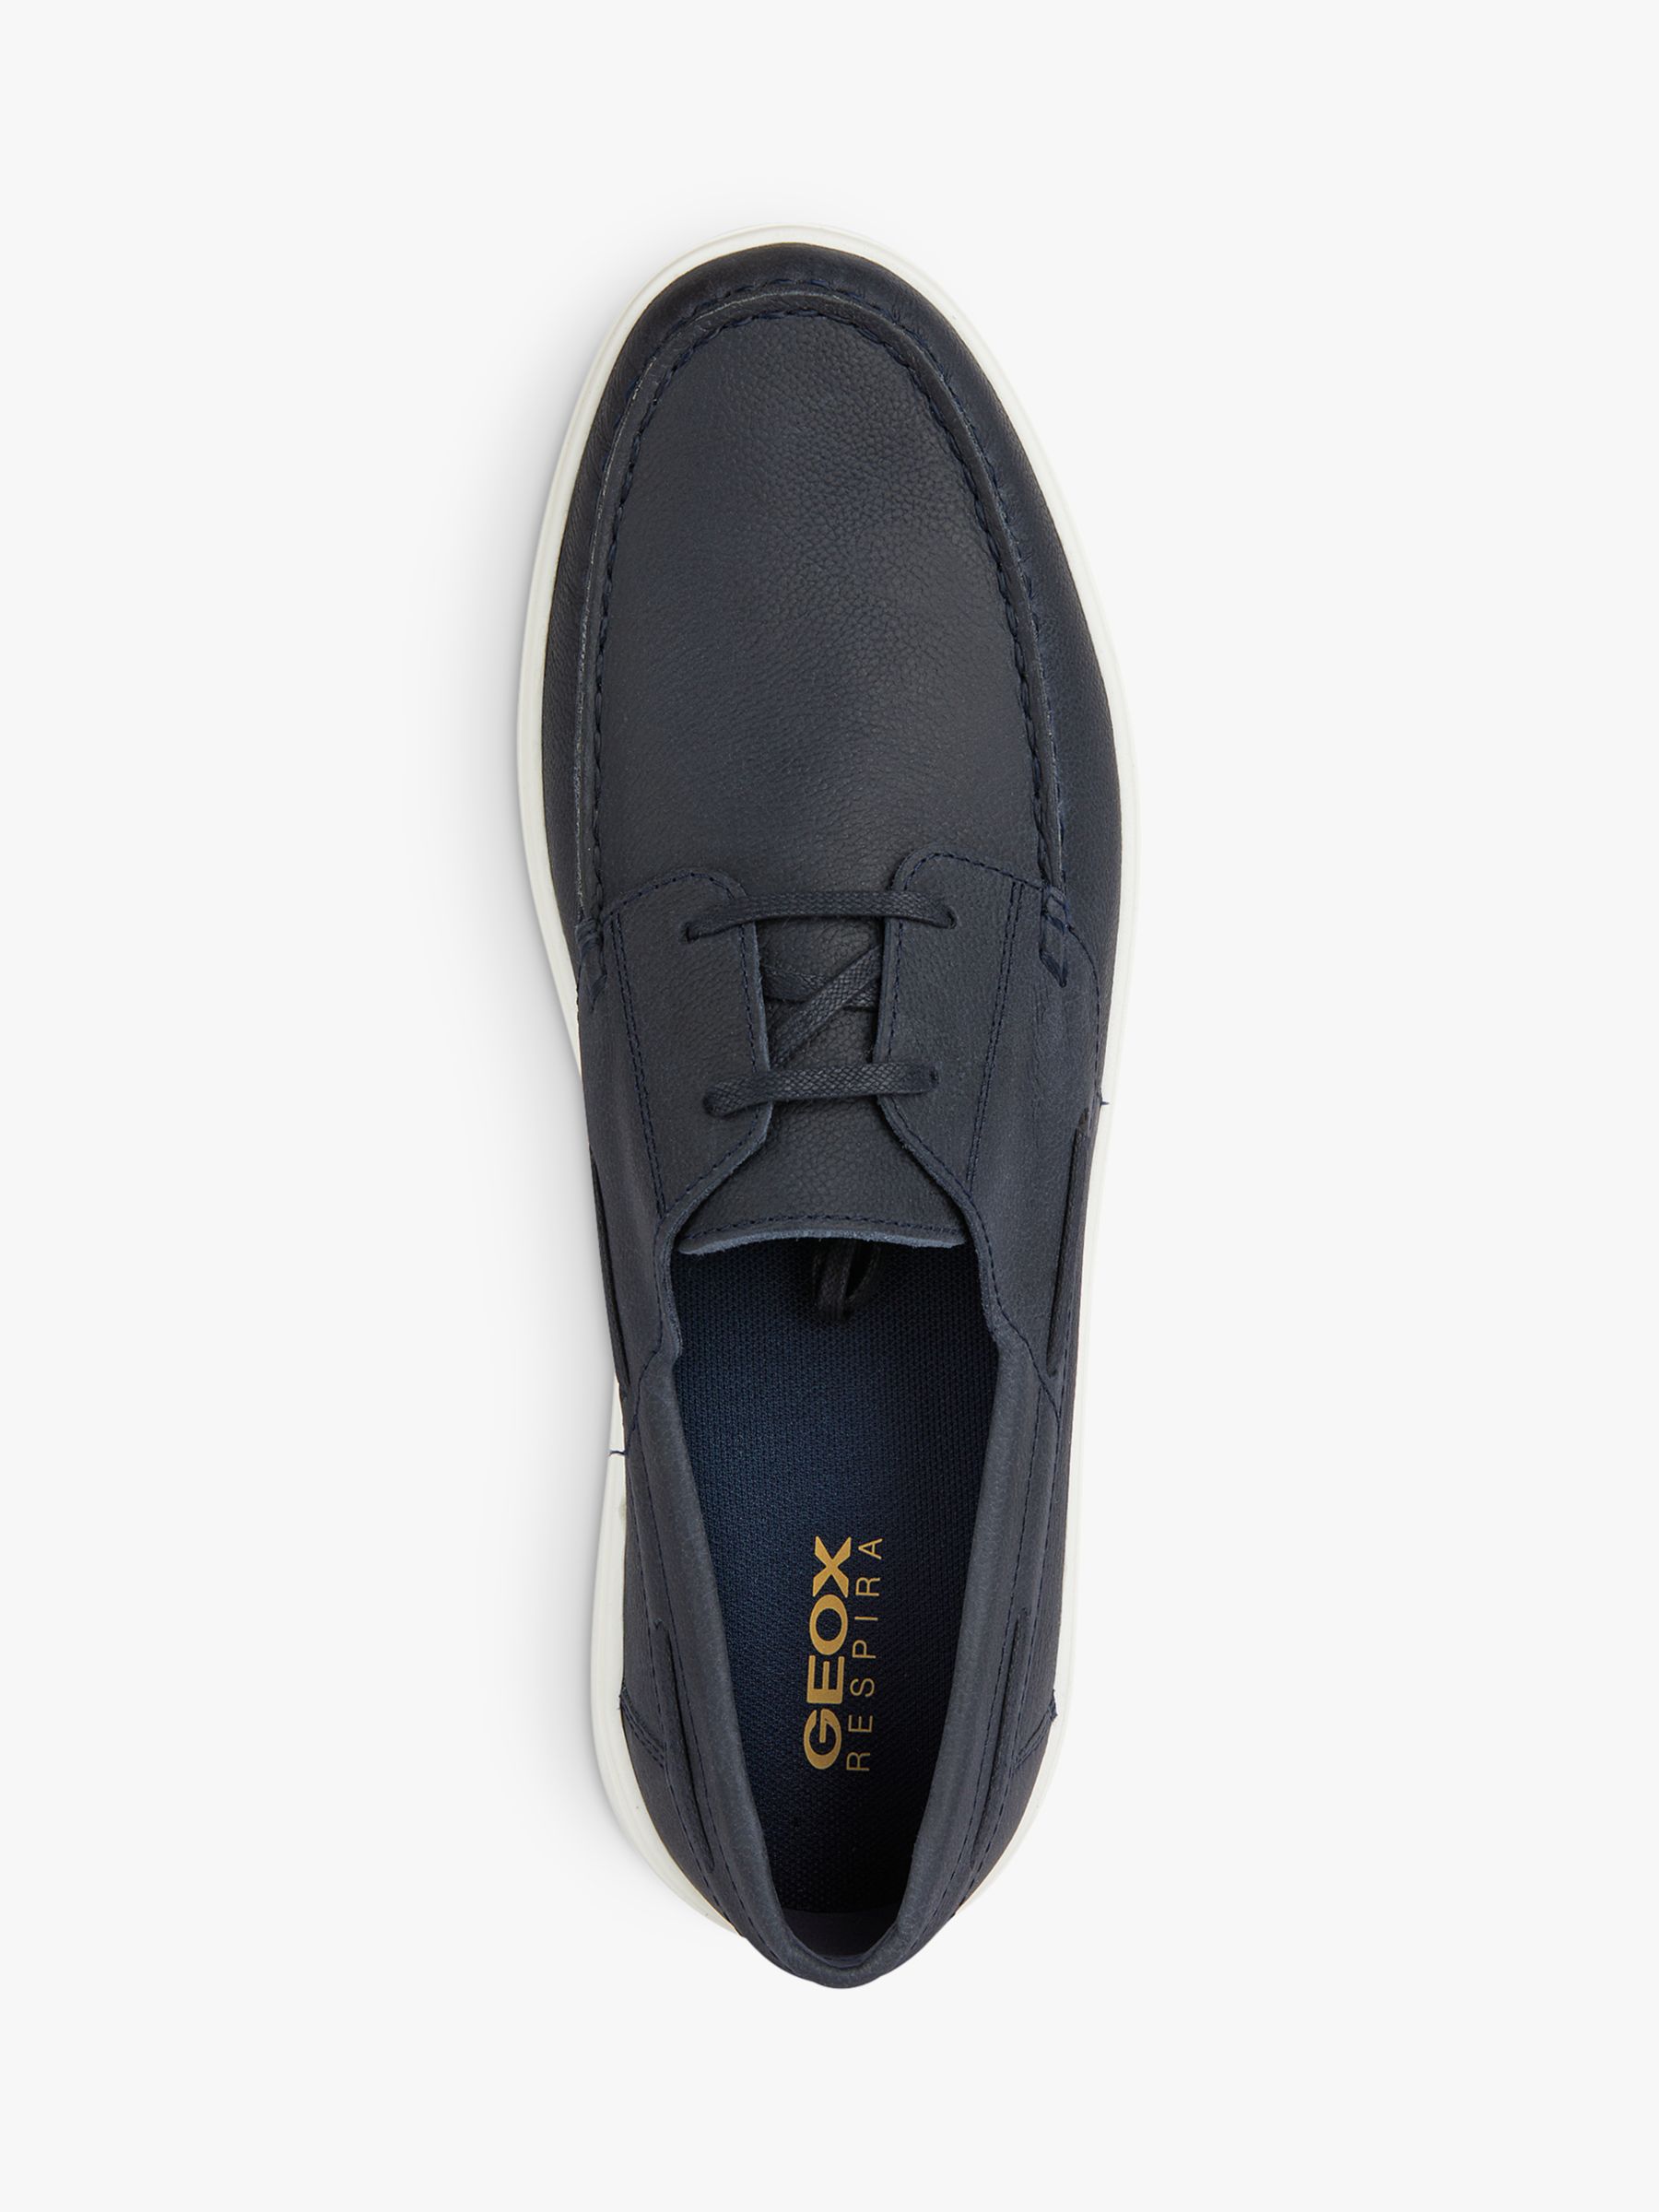 Geox Avola Leather Loafers, Navy, EU44